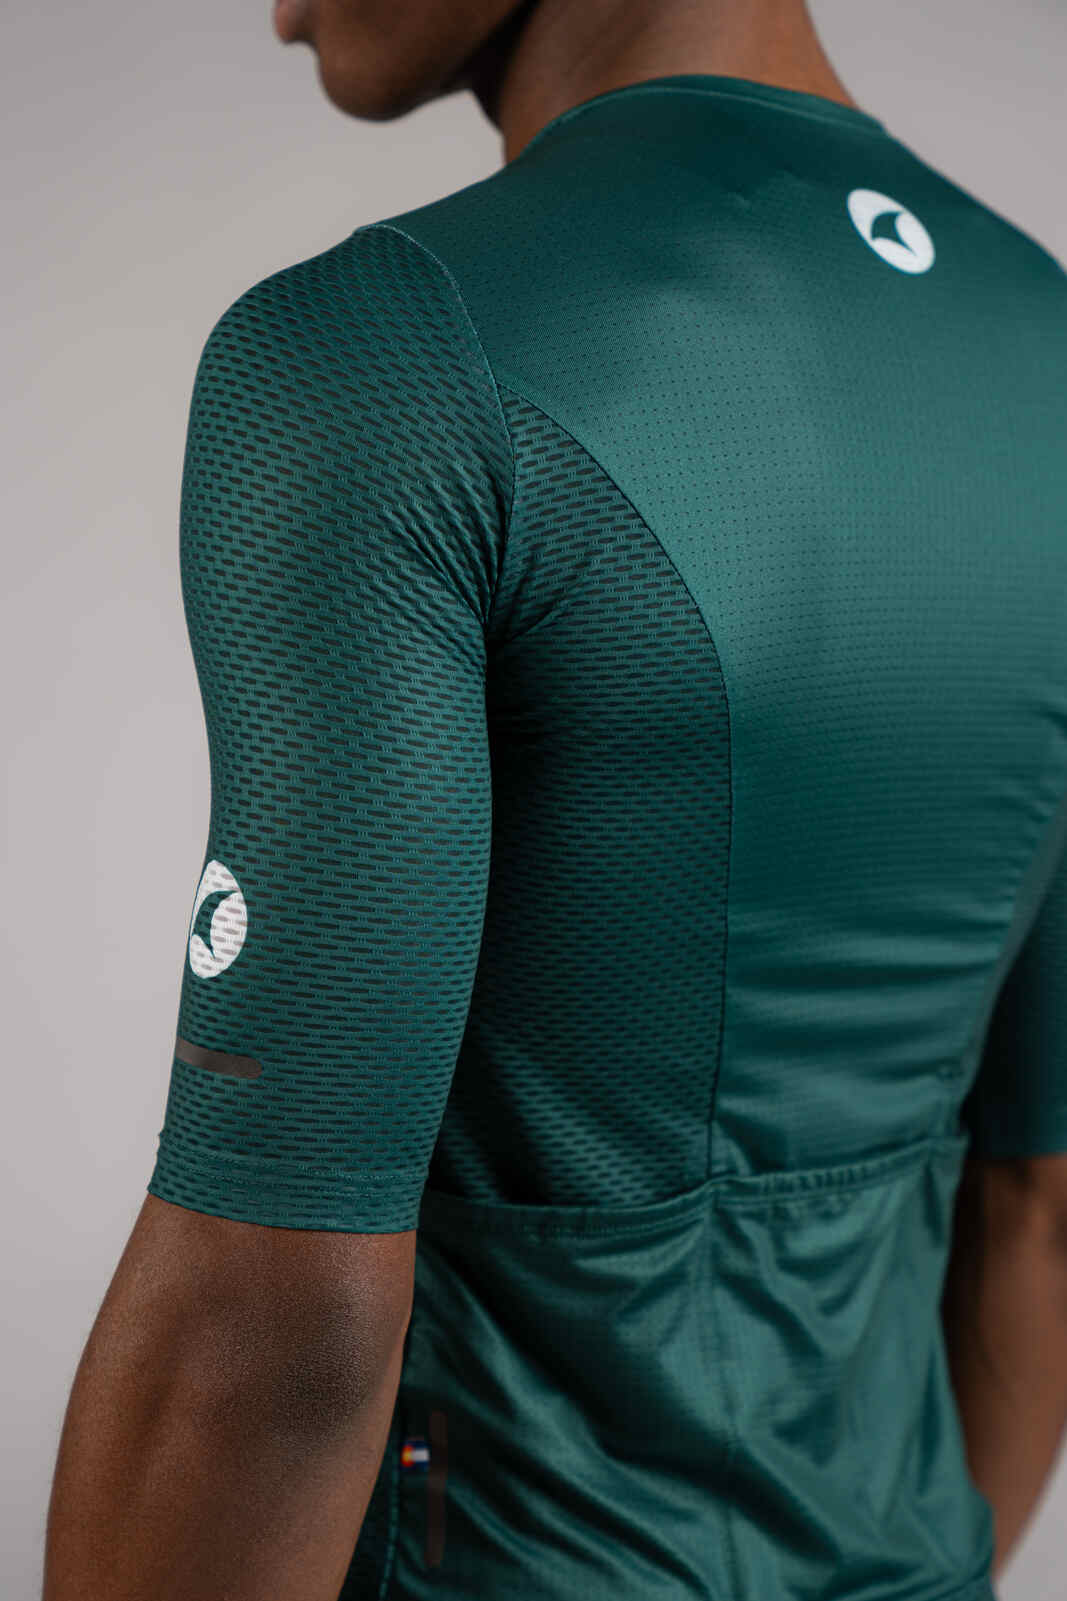 Men's Green Mesh Cycling Jersey - Sleeve Close-Up